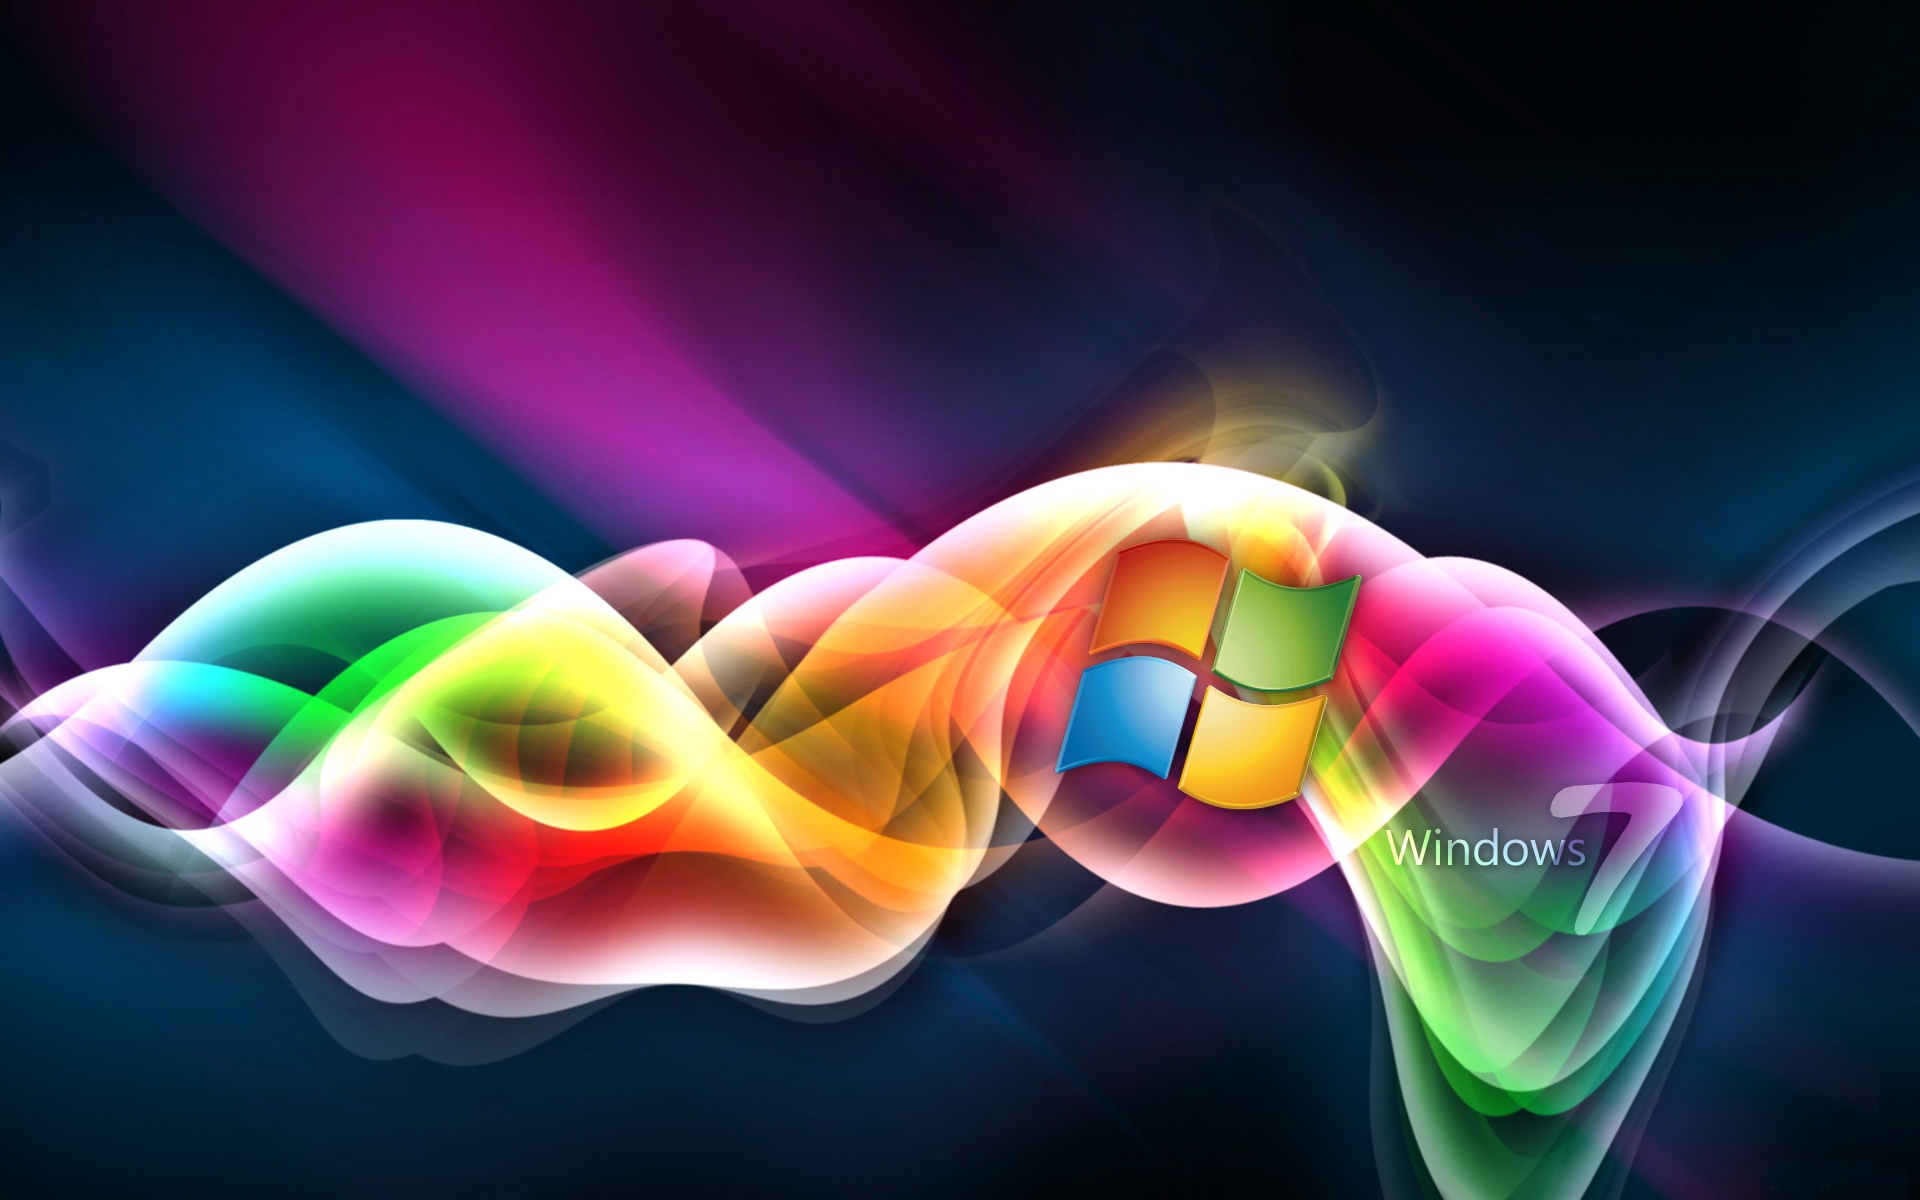  Spectacular Windows Desktop Backgrounds